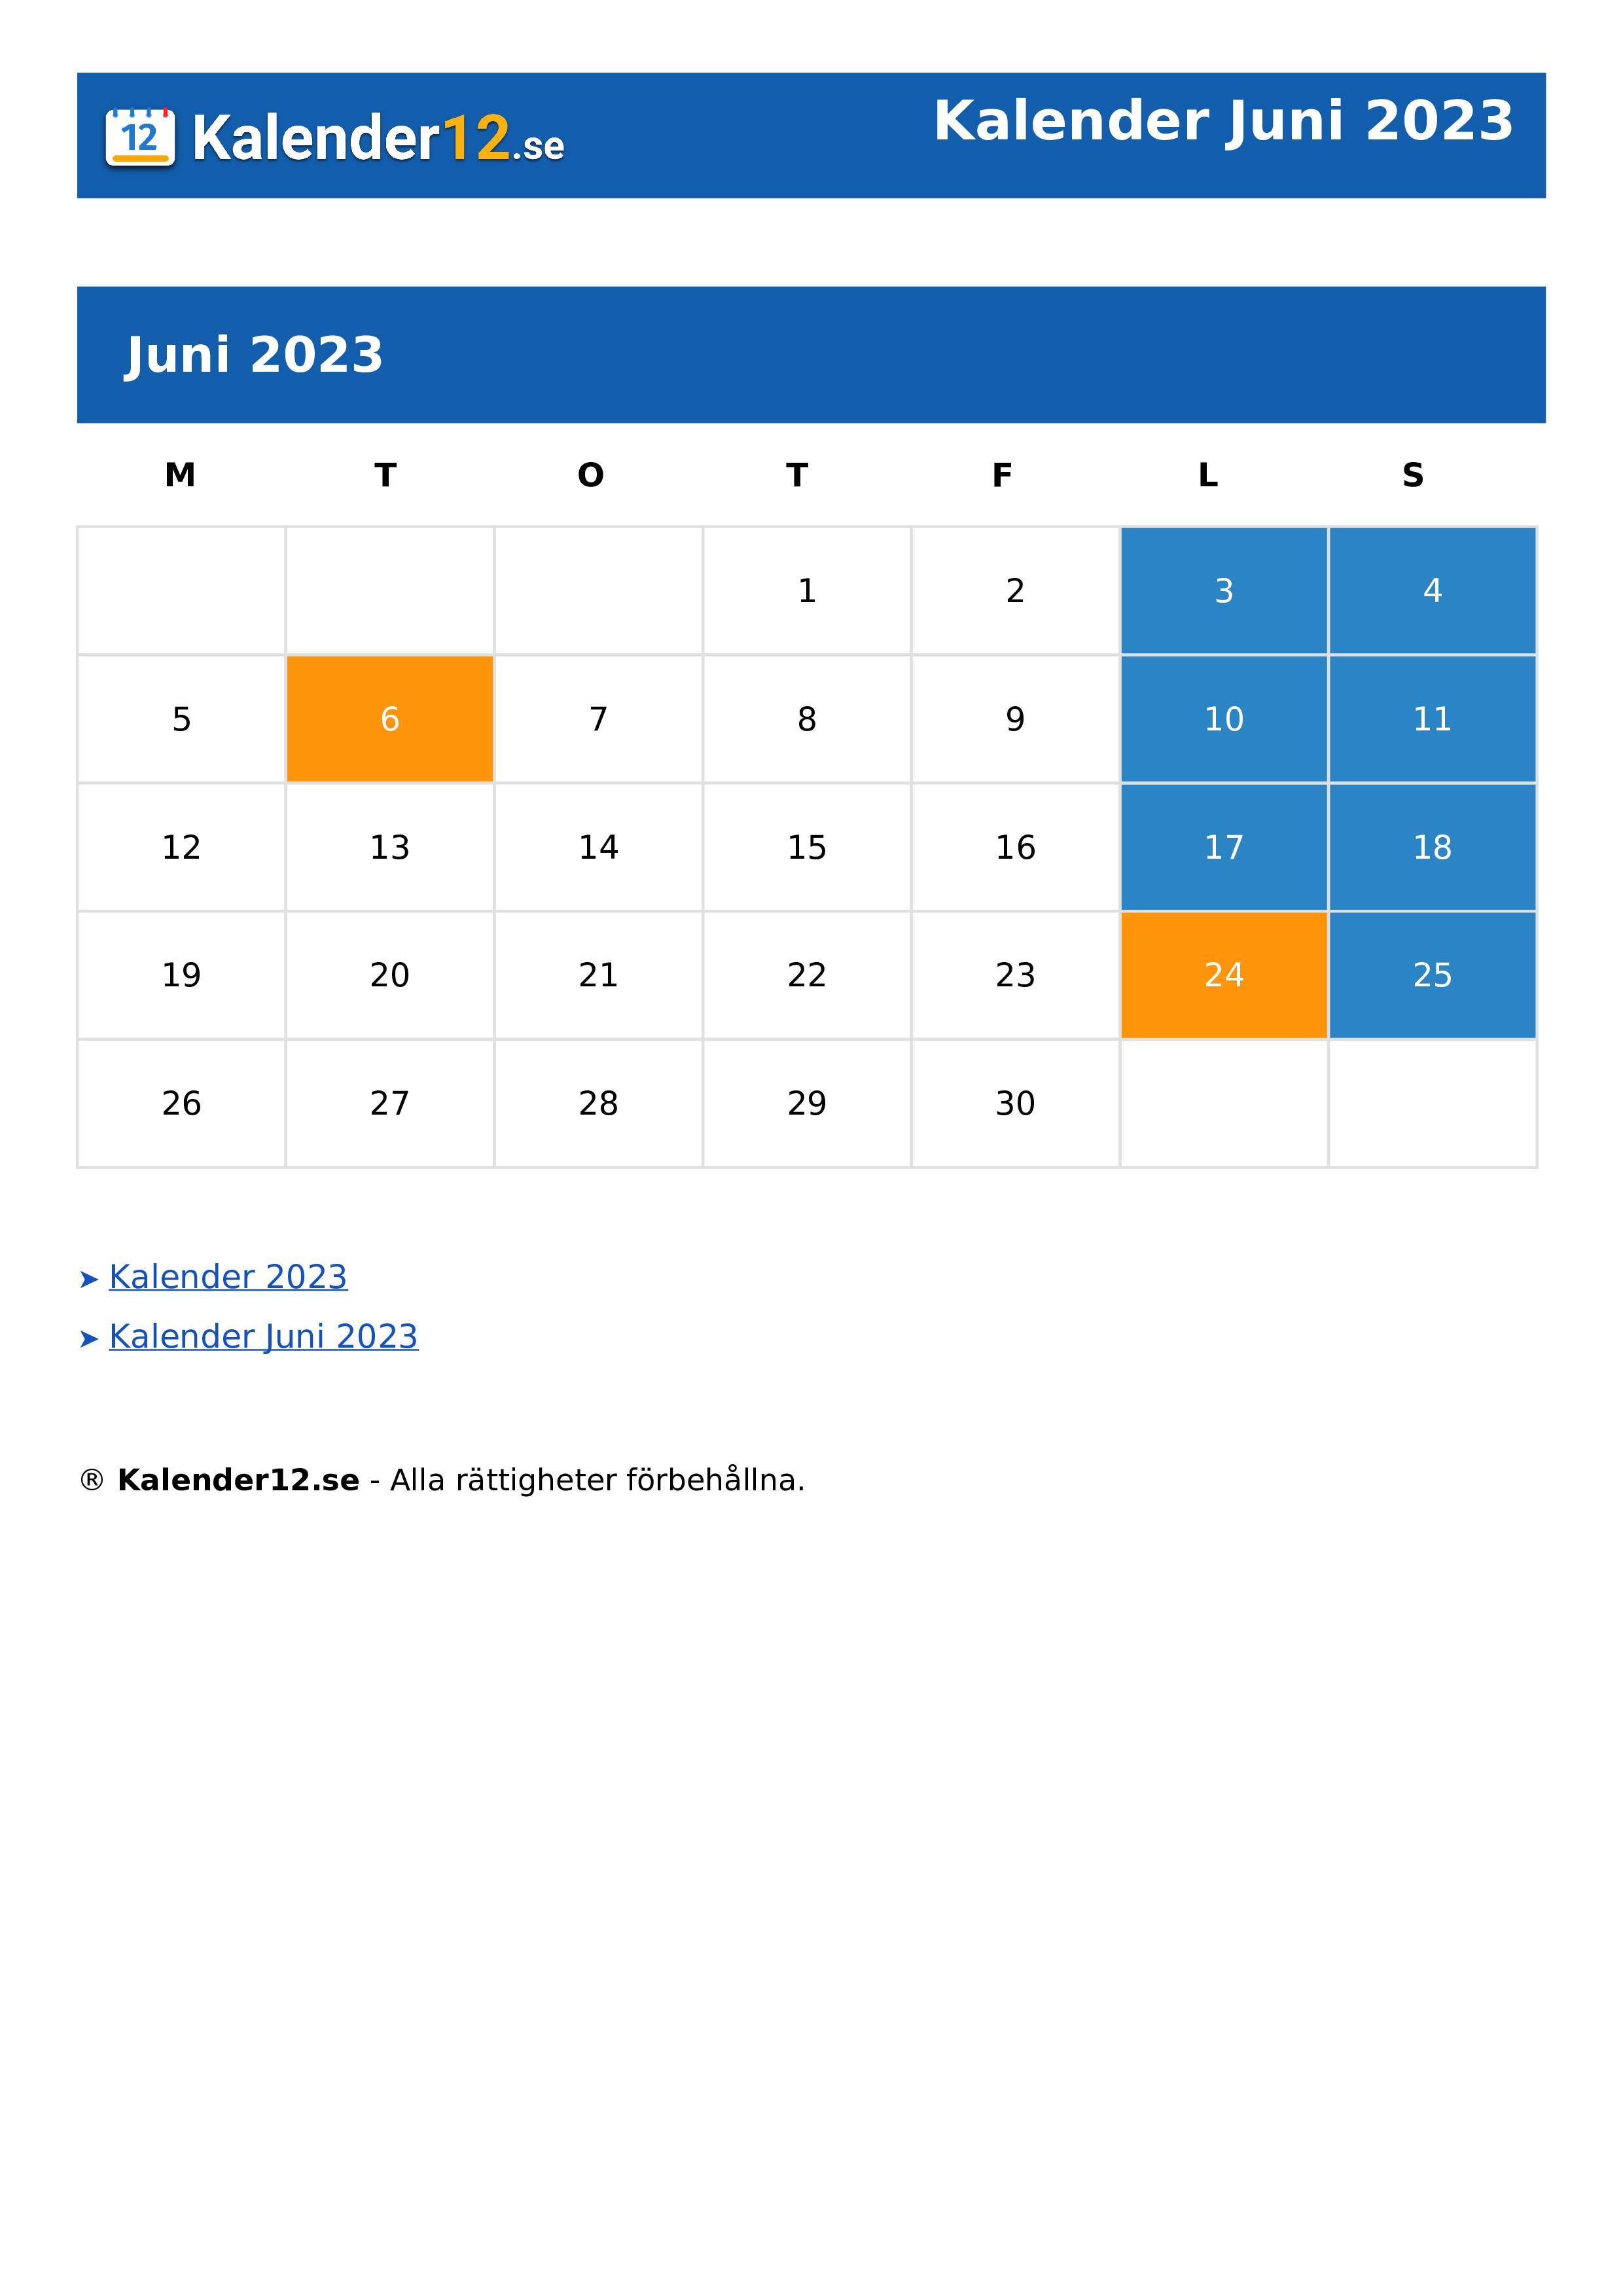 Calendar Juni 2023